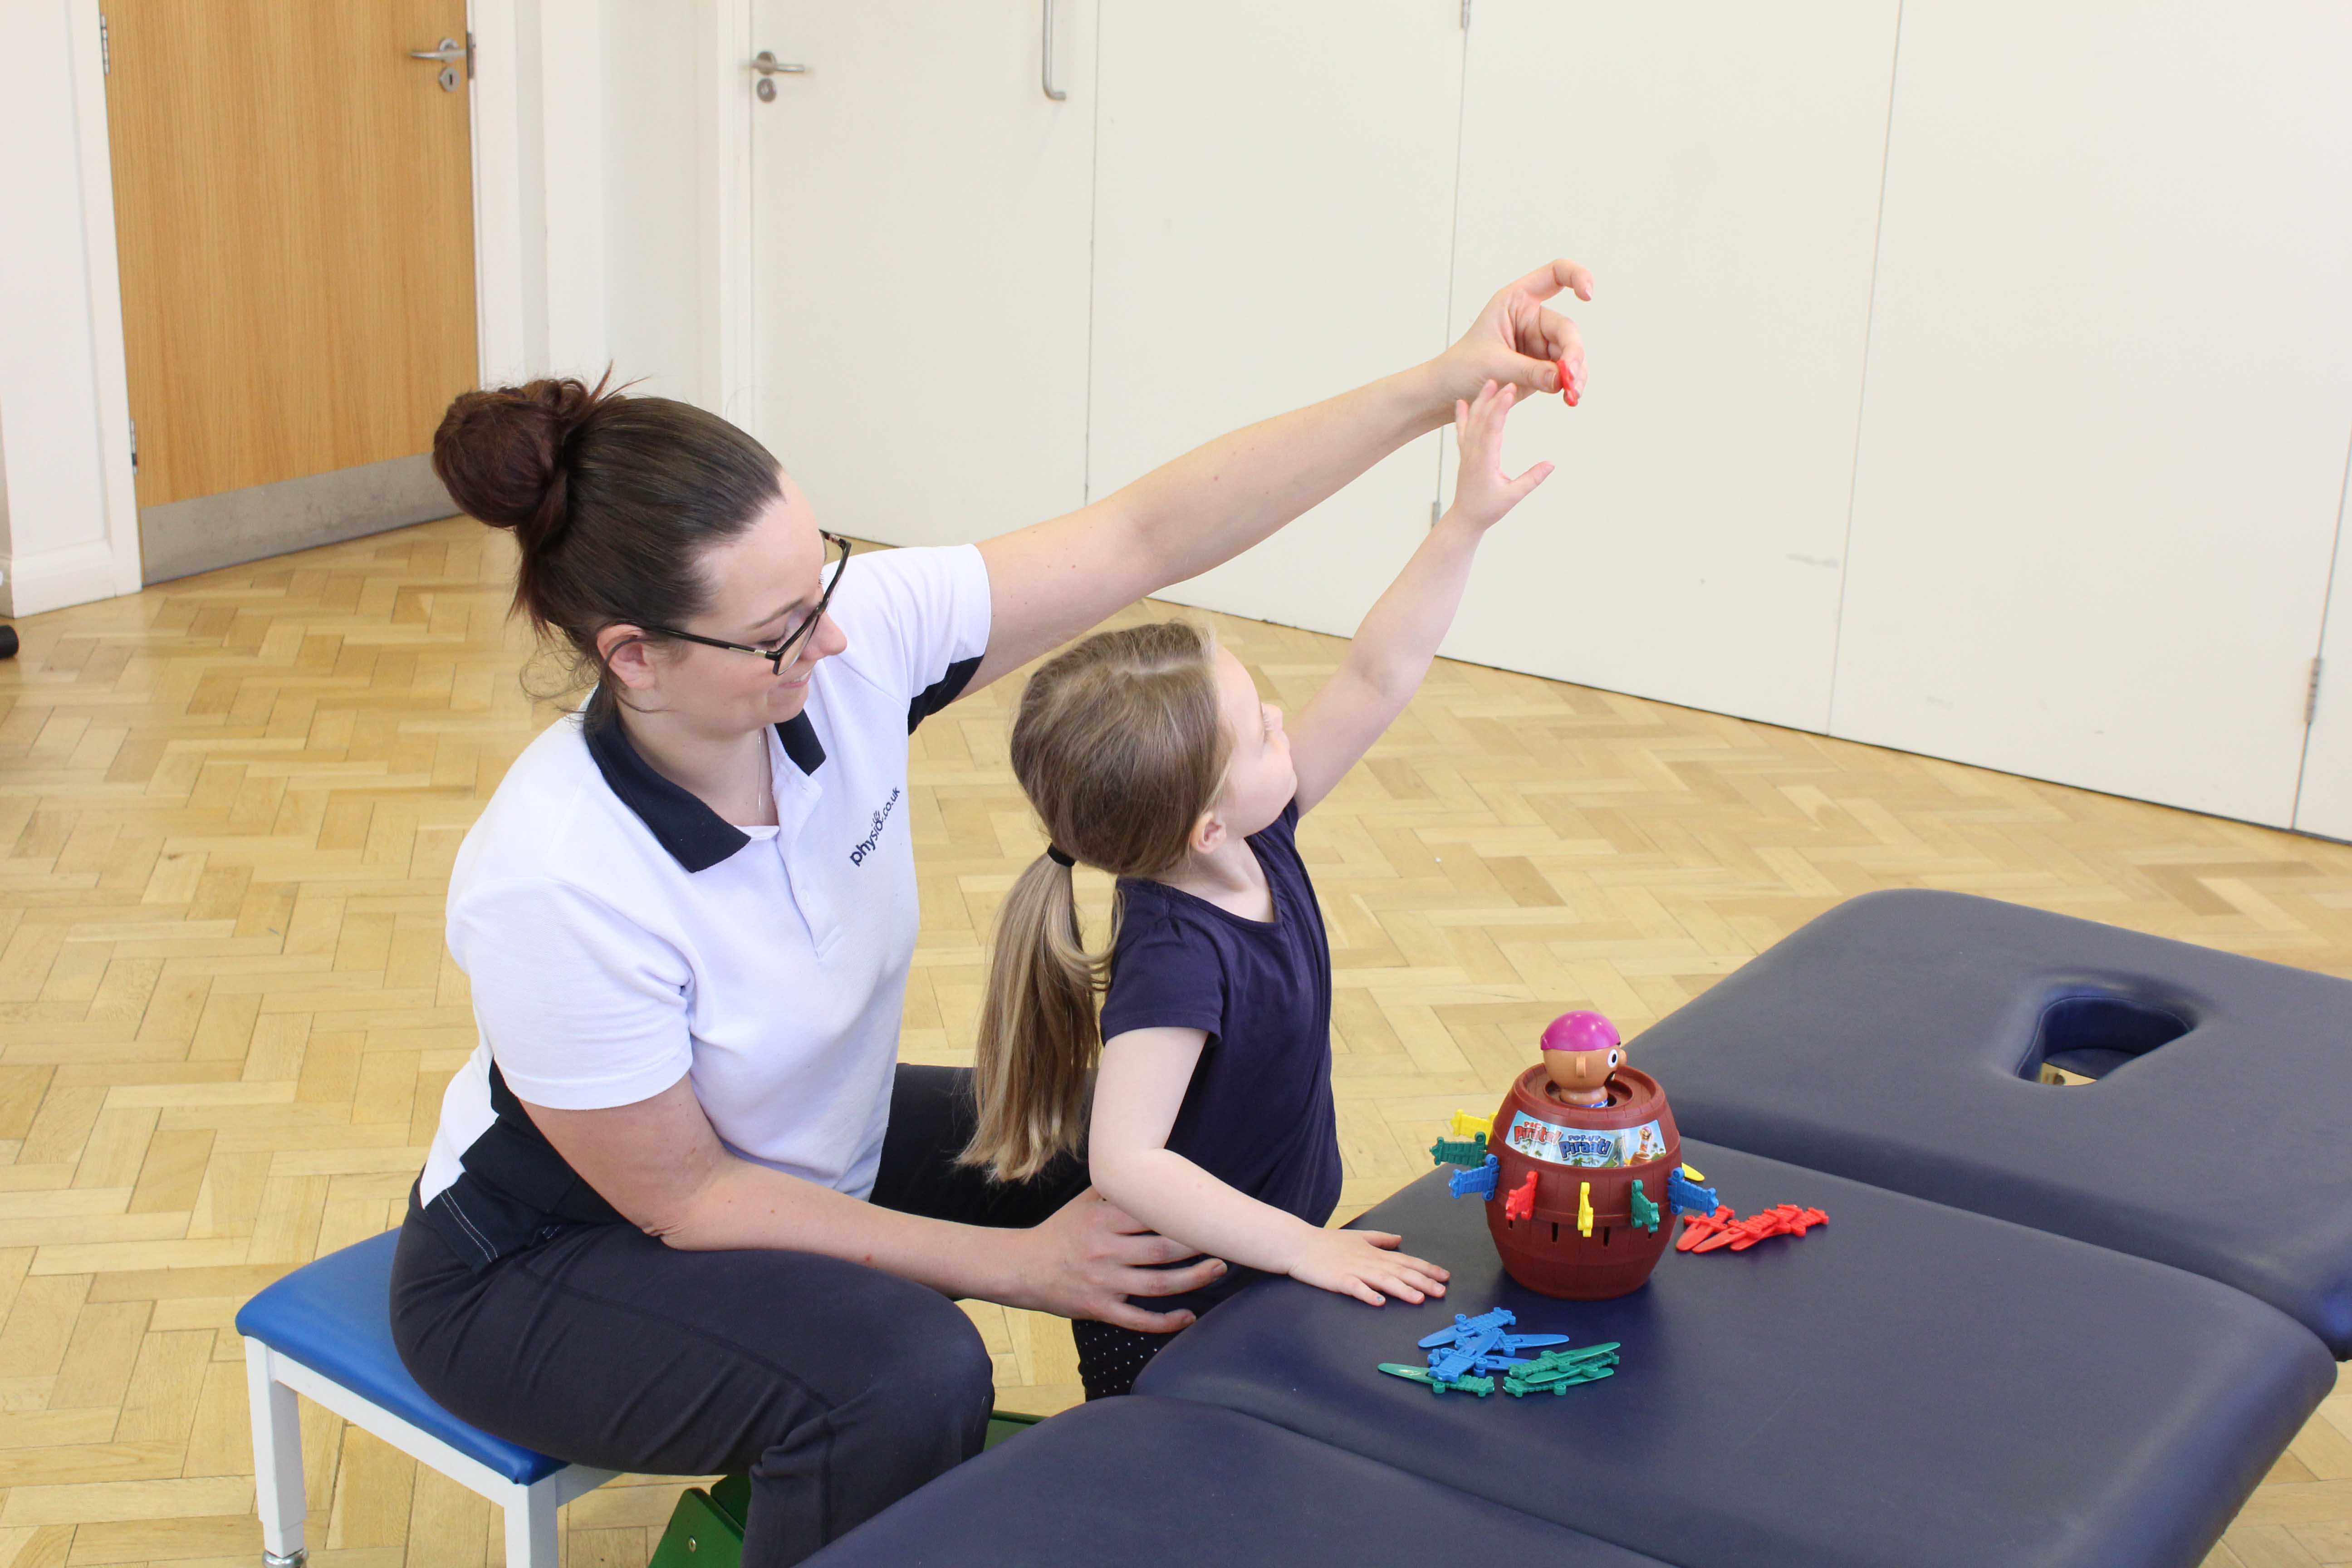 Developing fine motor skills through play activities supervised bya paediatric physiotherapist